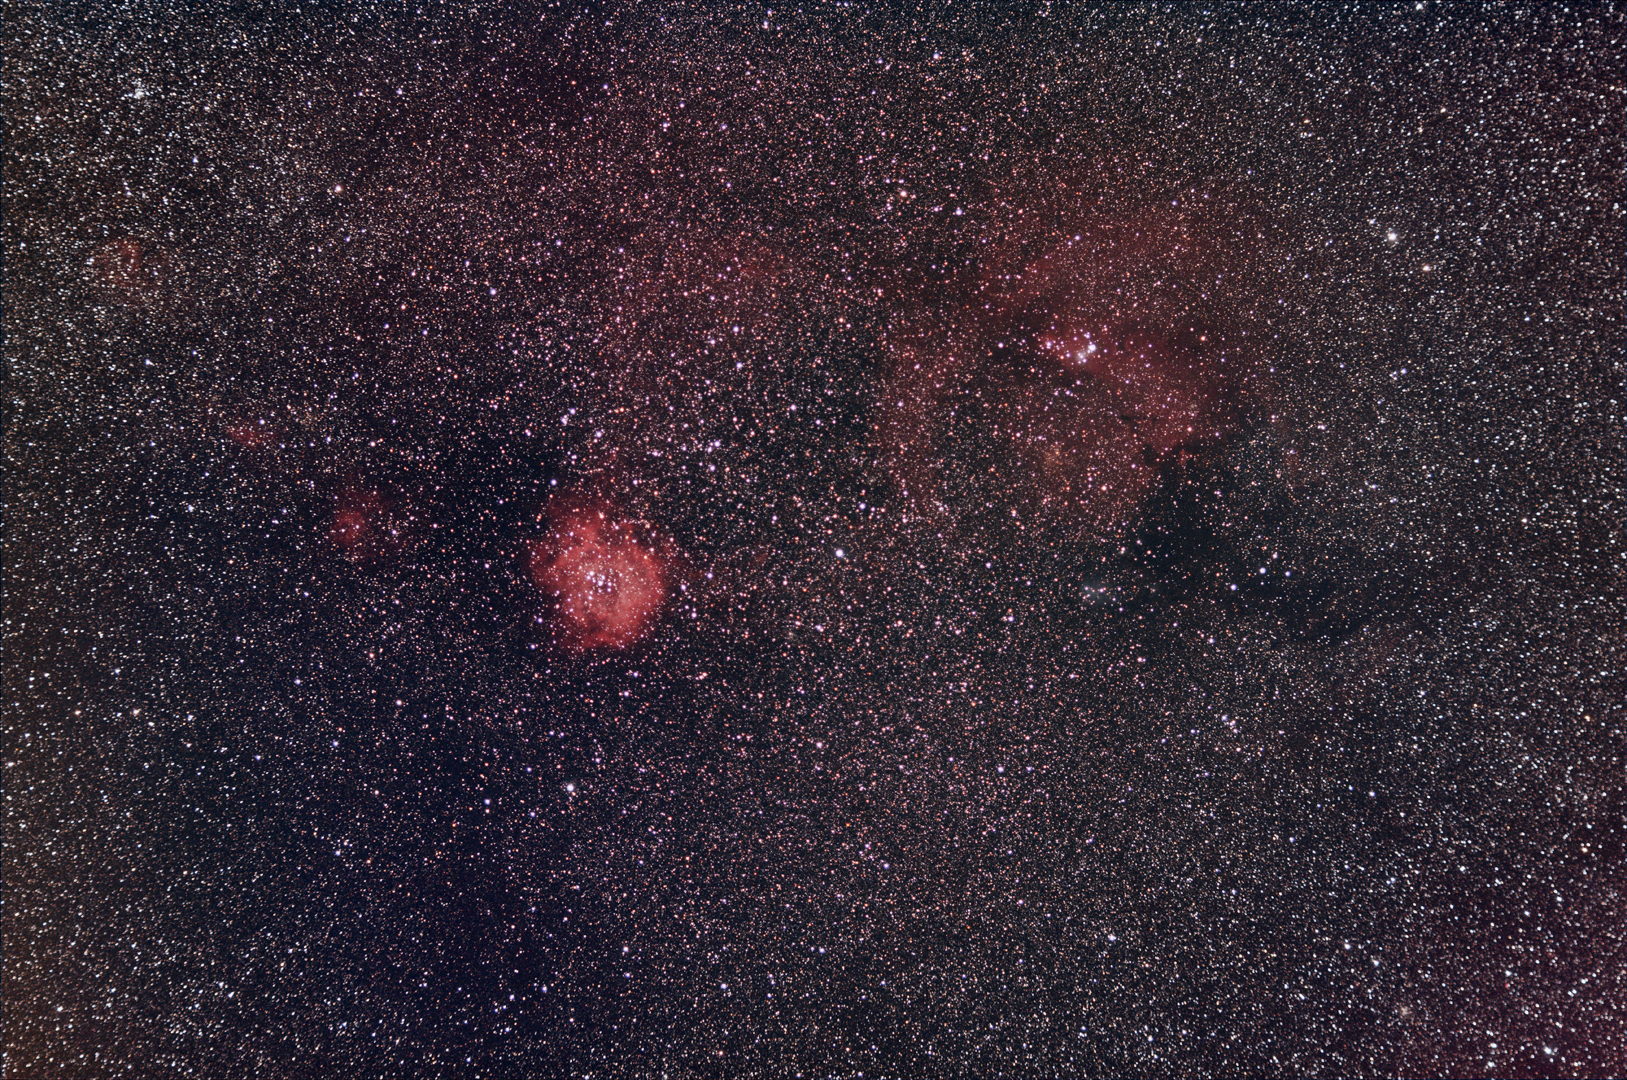 rosette nebula, ngc2237